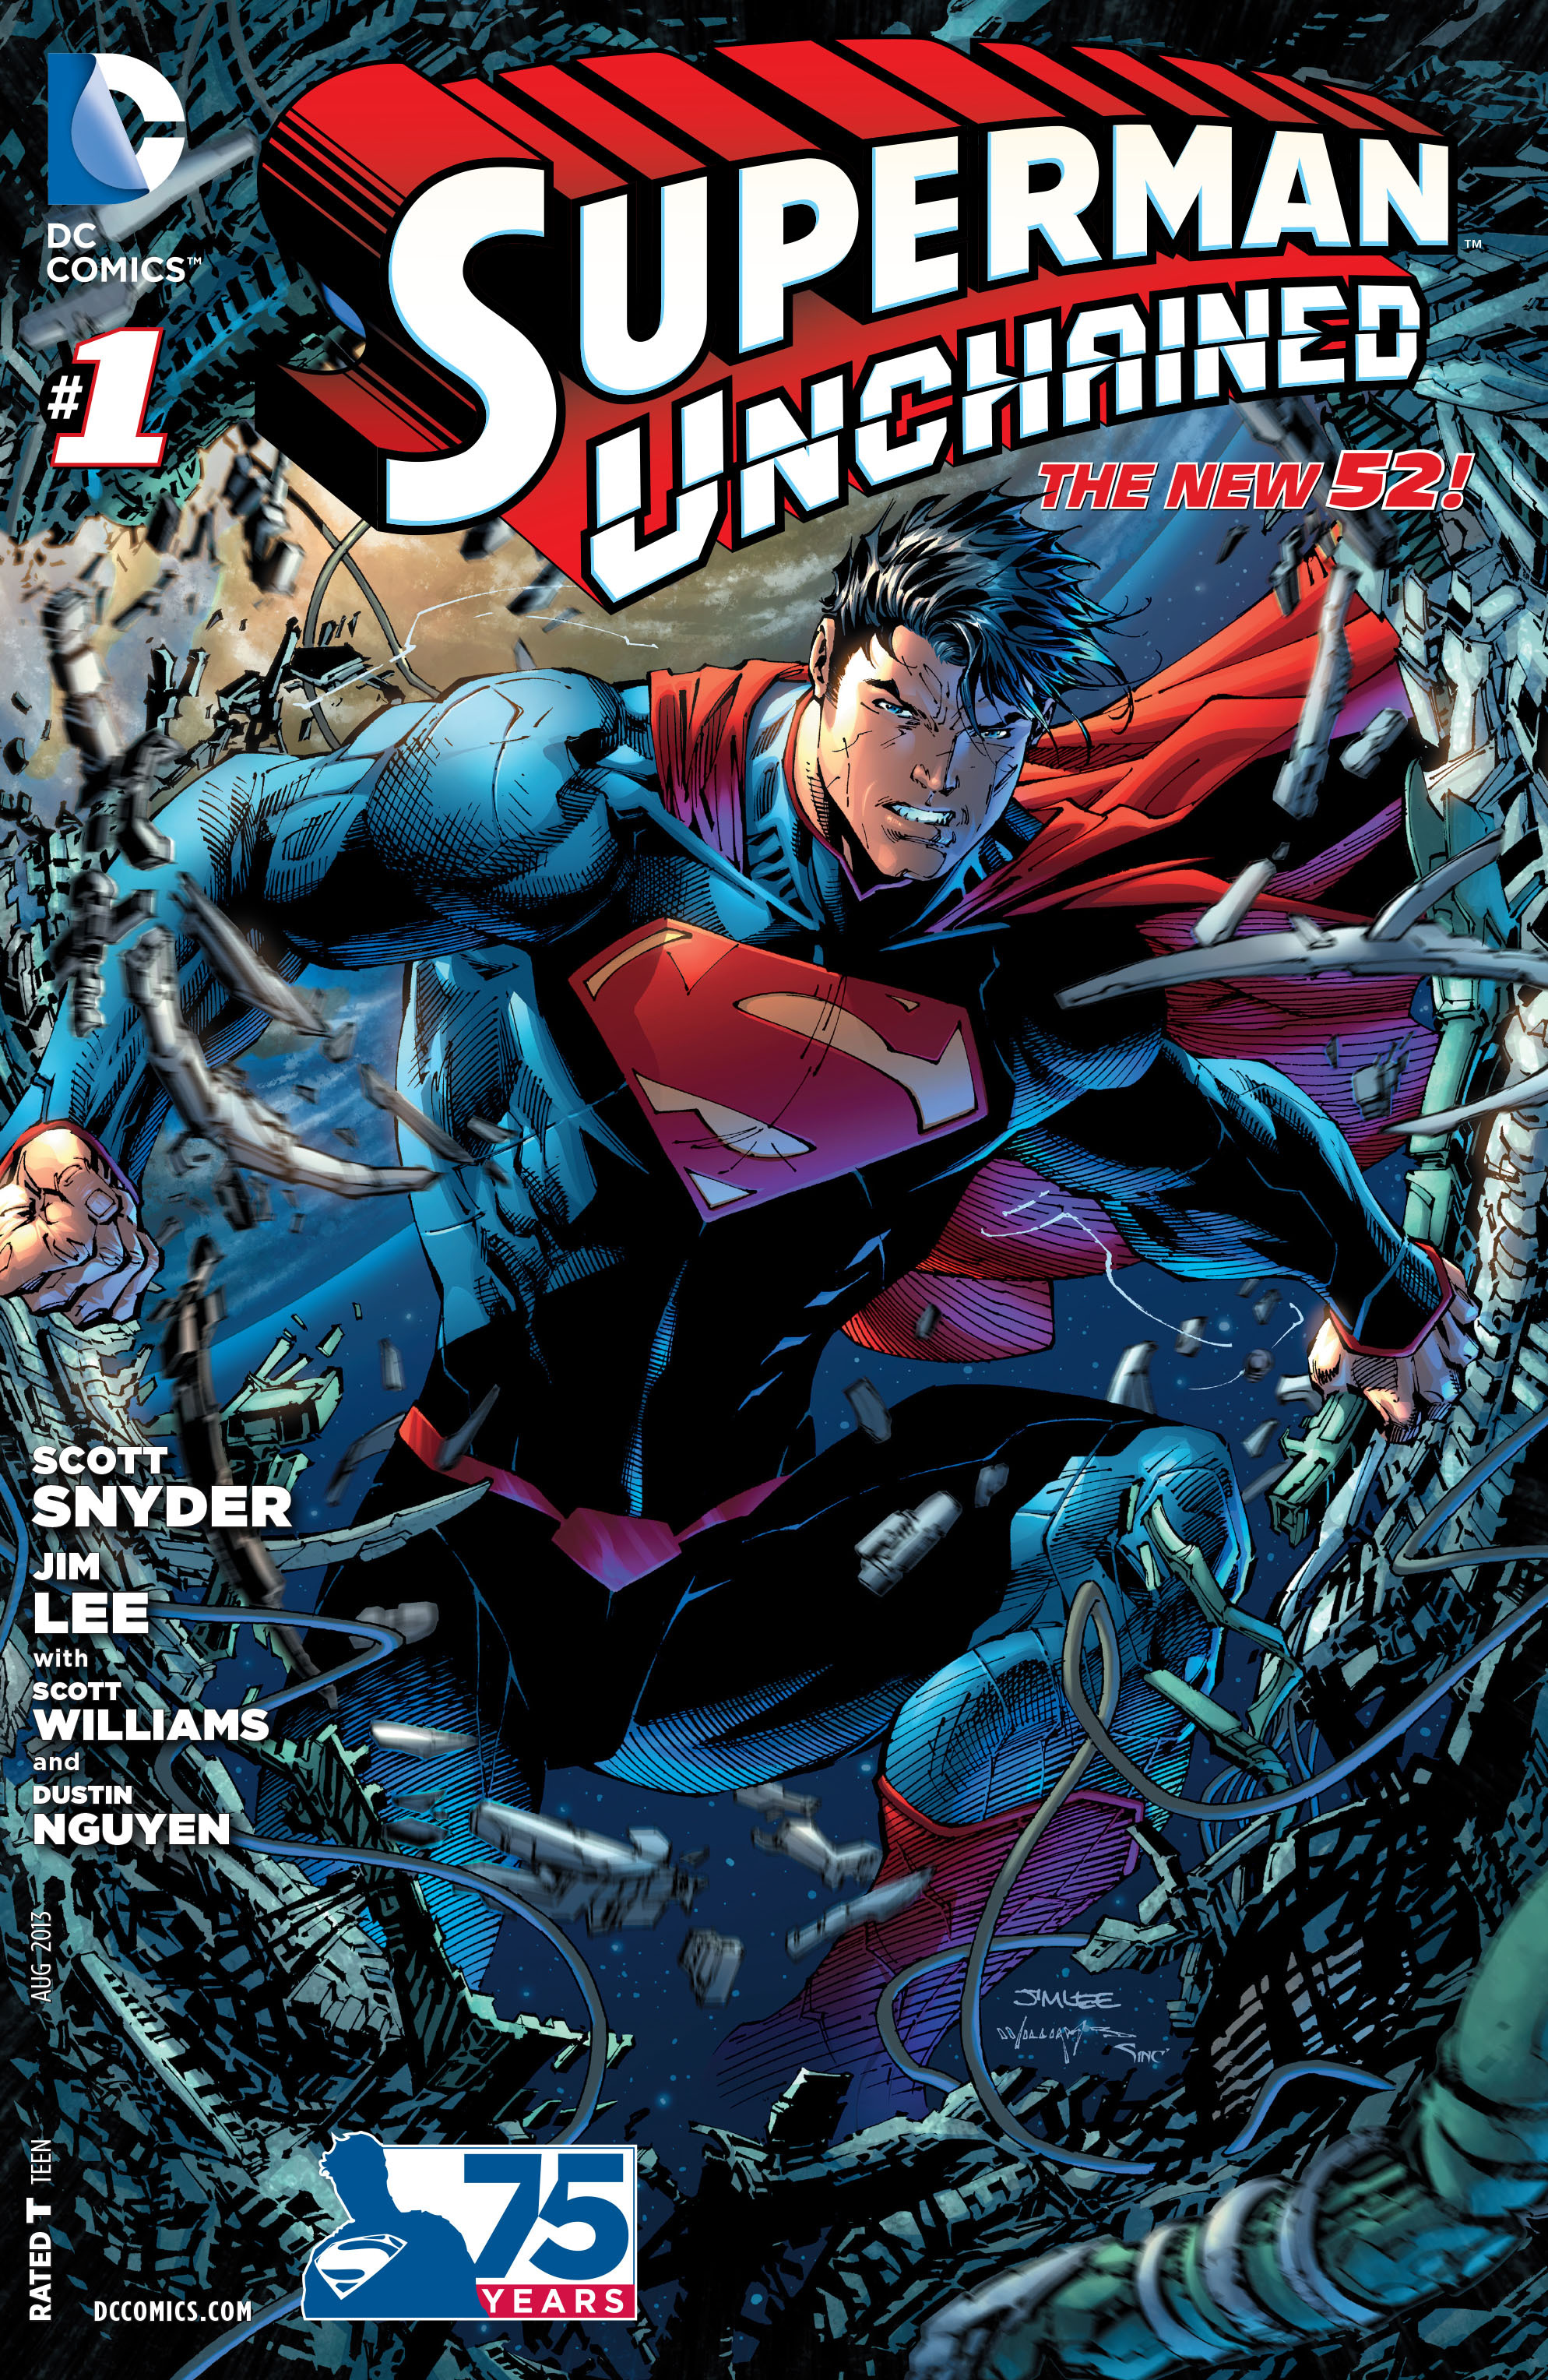 Superman Unchained Vol 1 1.jpg